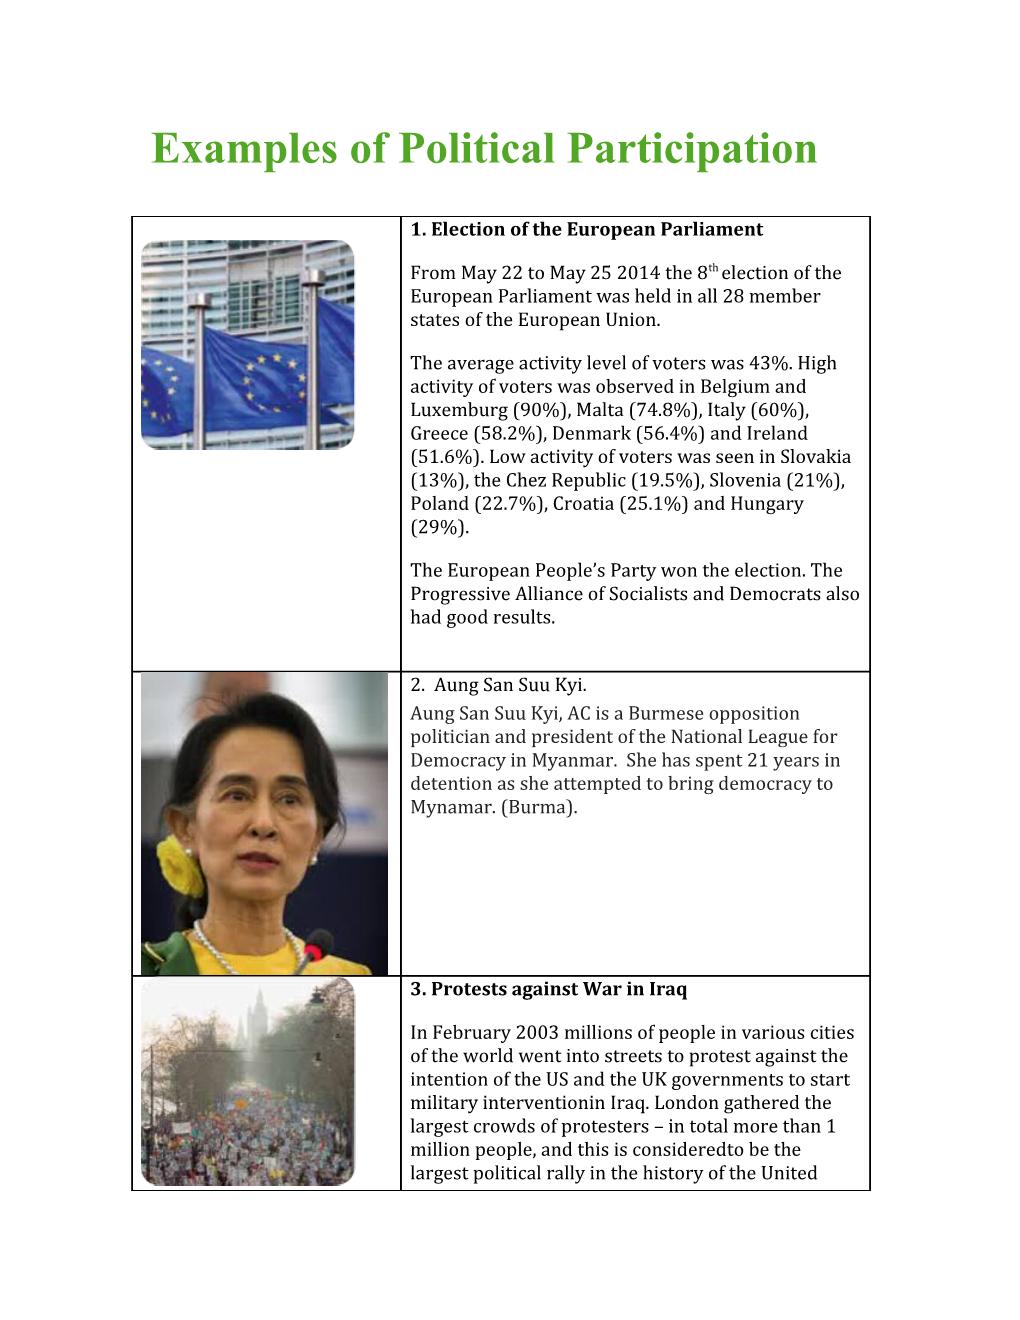 2. Aung San Suu Kyi